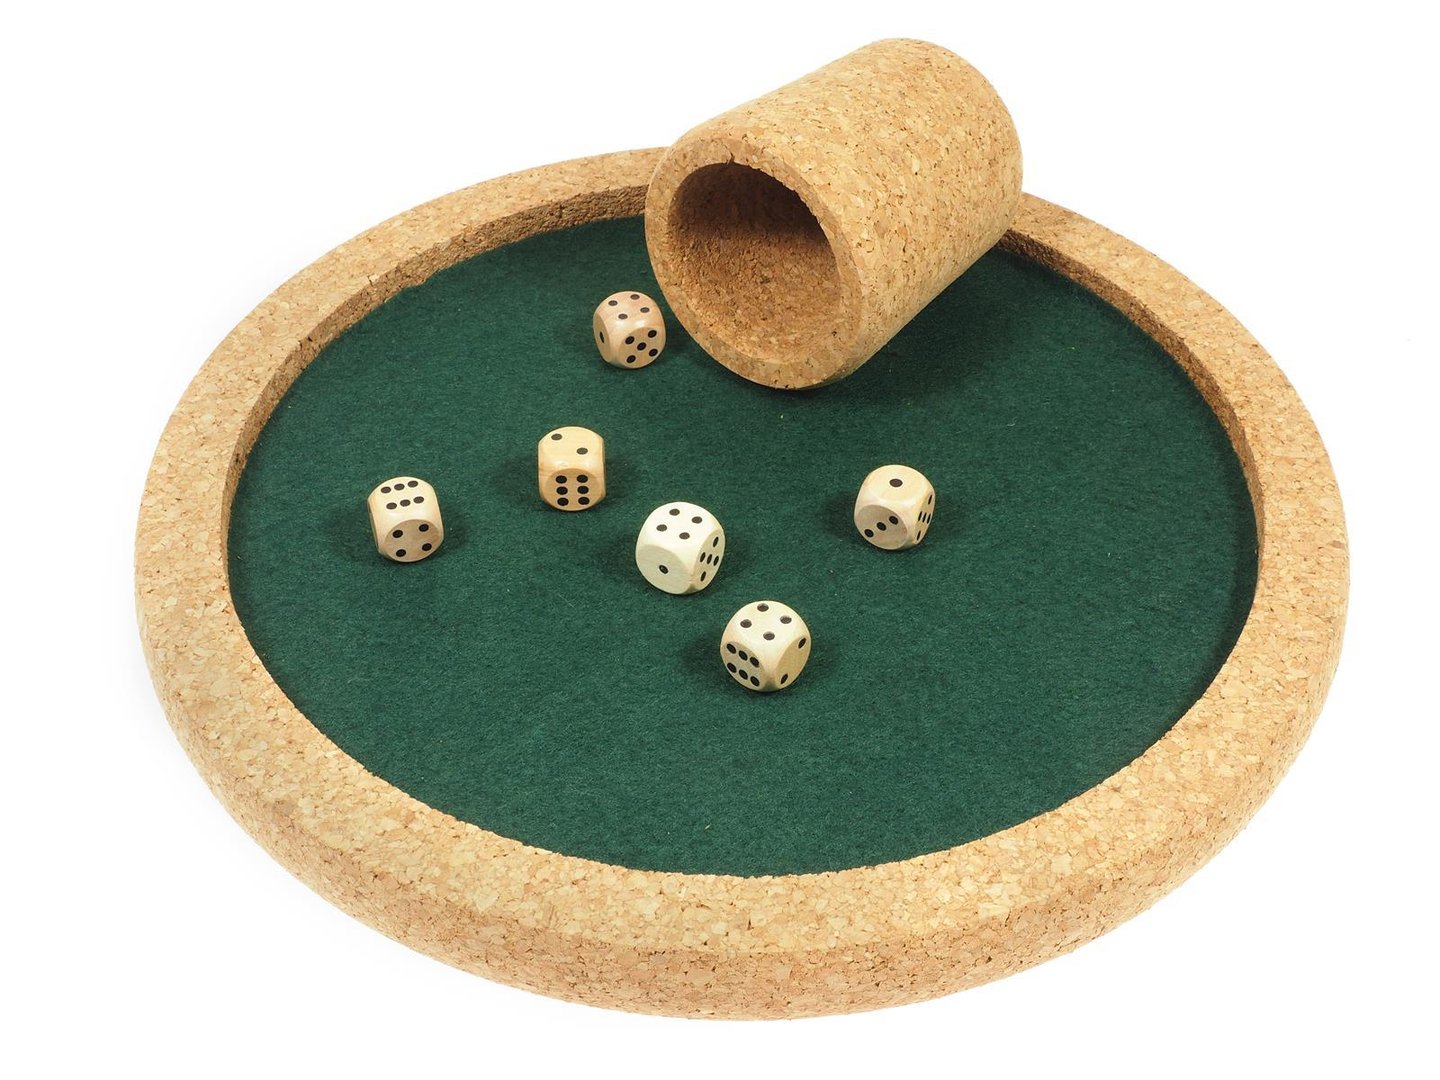 7000 Cork dice game set